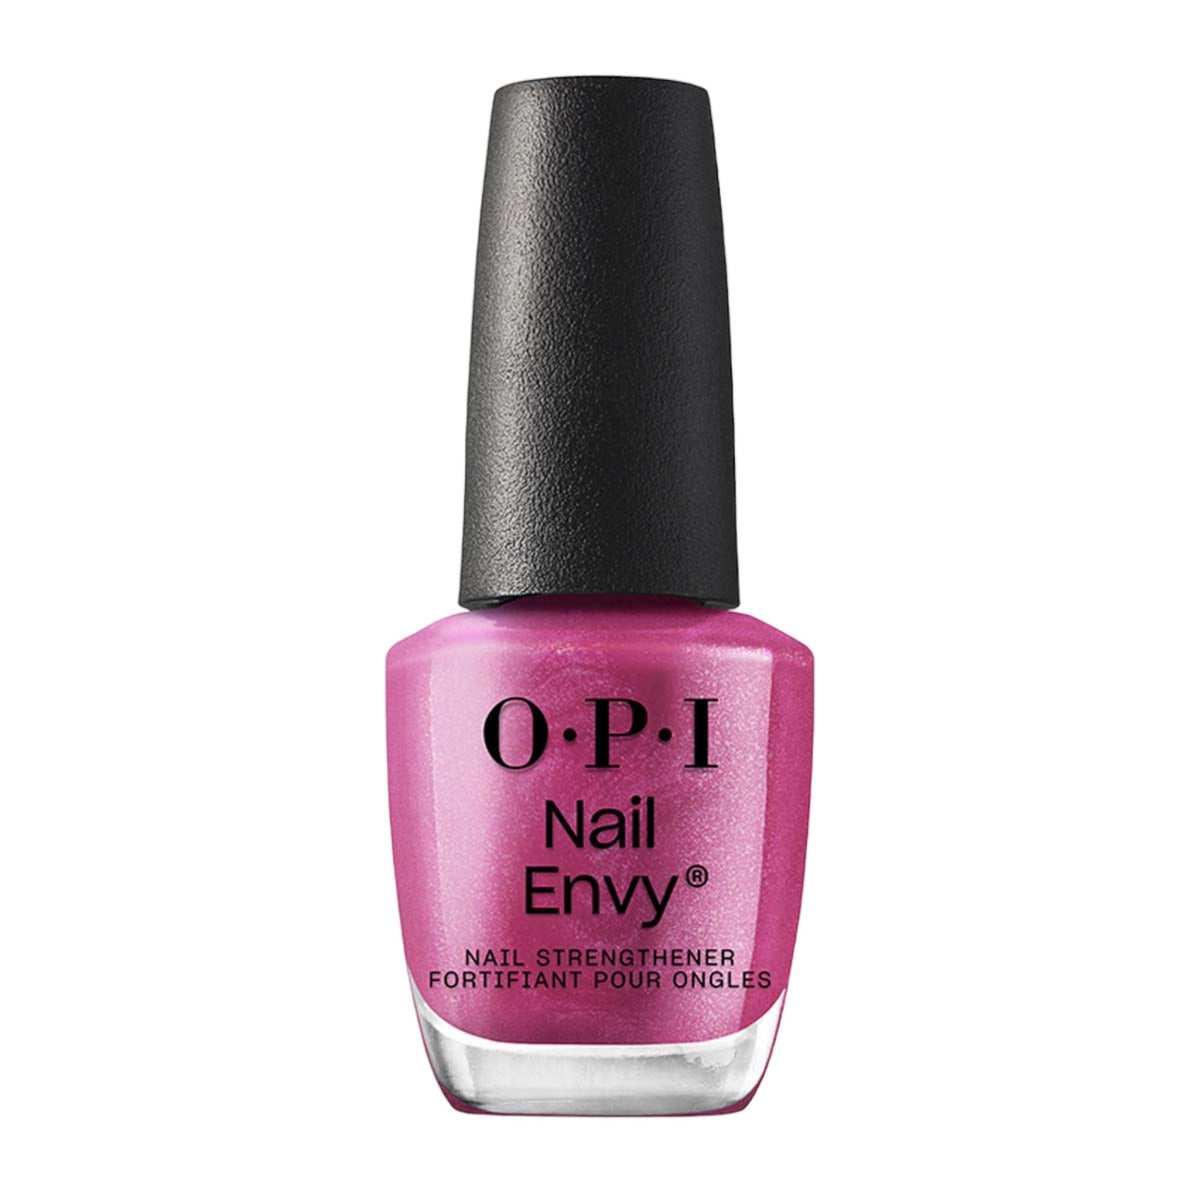 OPI Nail Envy Powerful Pink Nail Strengthener 15ml